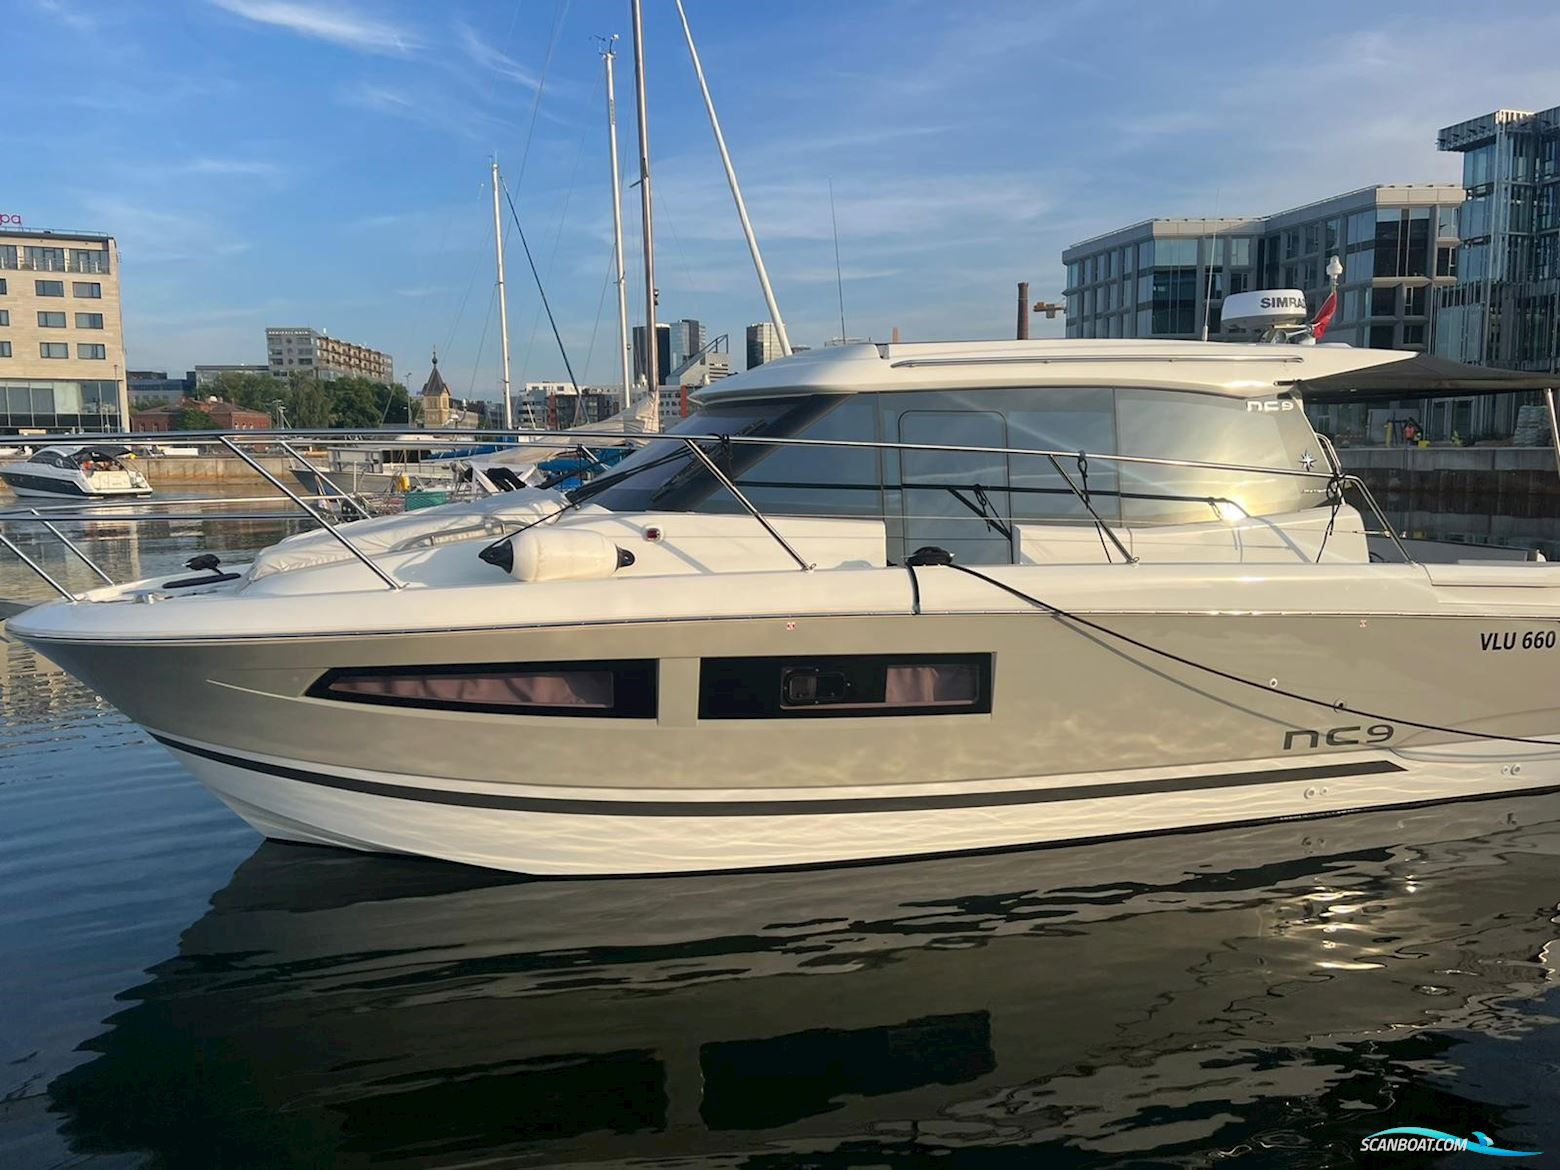 Jeanneau NC9 Motor boat 2019, The Netherlands